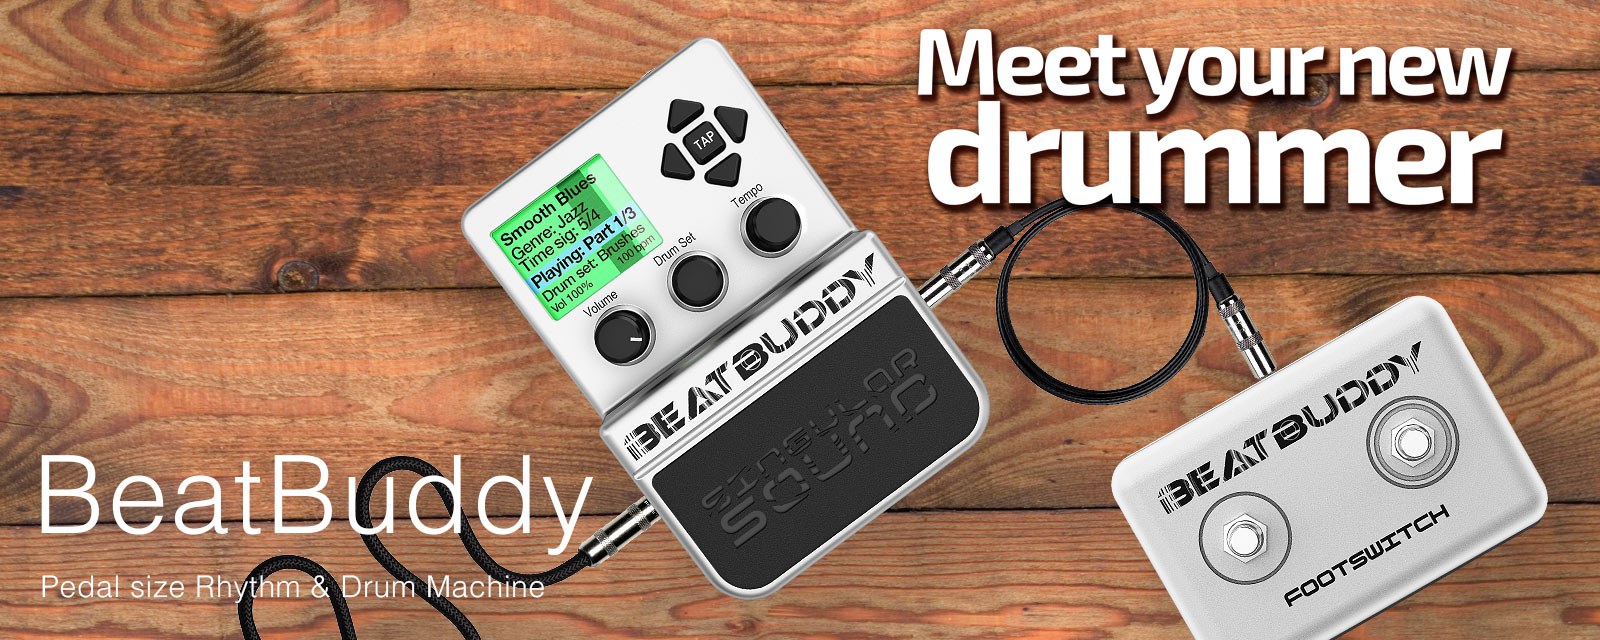 Beat Buddy - SINGULAR SOUND | Hookup, Inc.